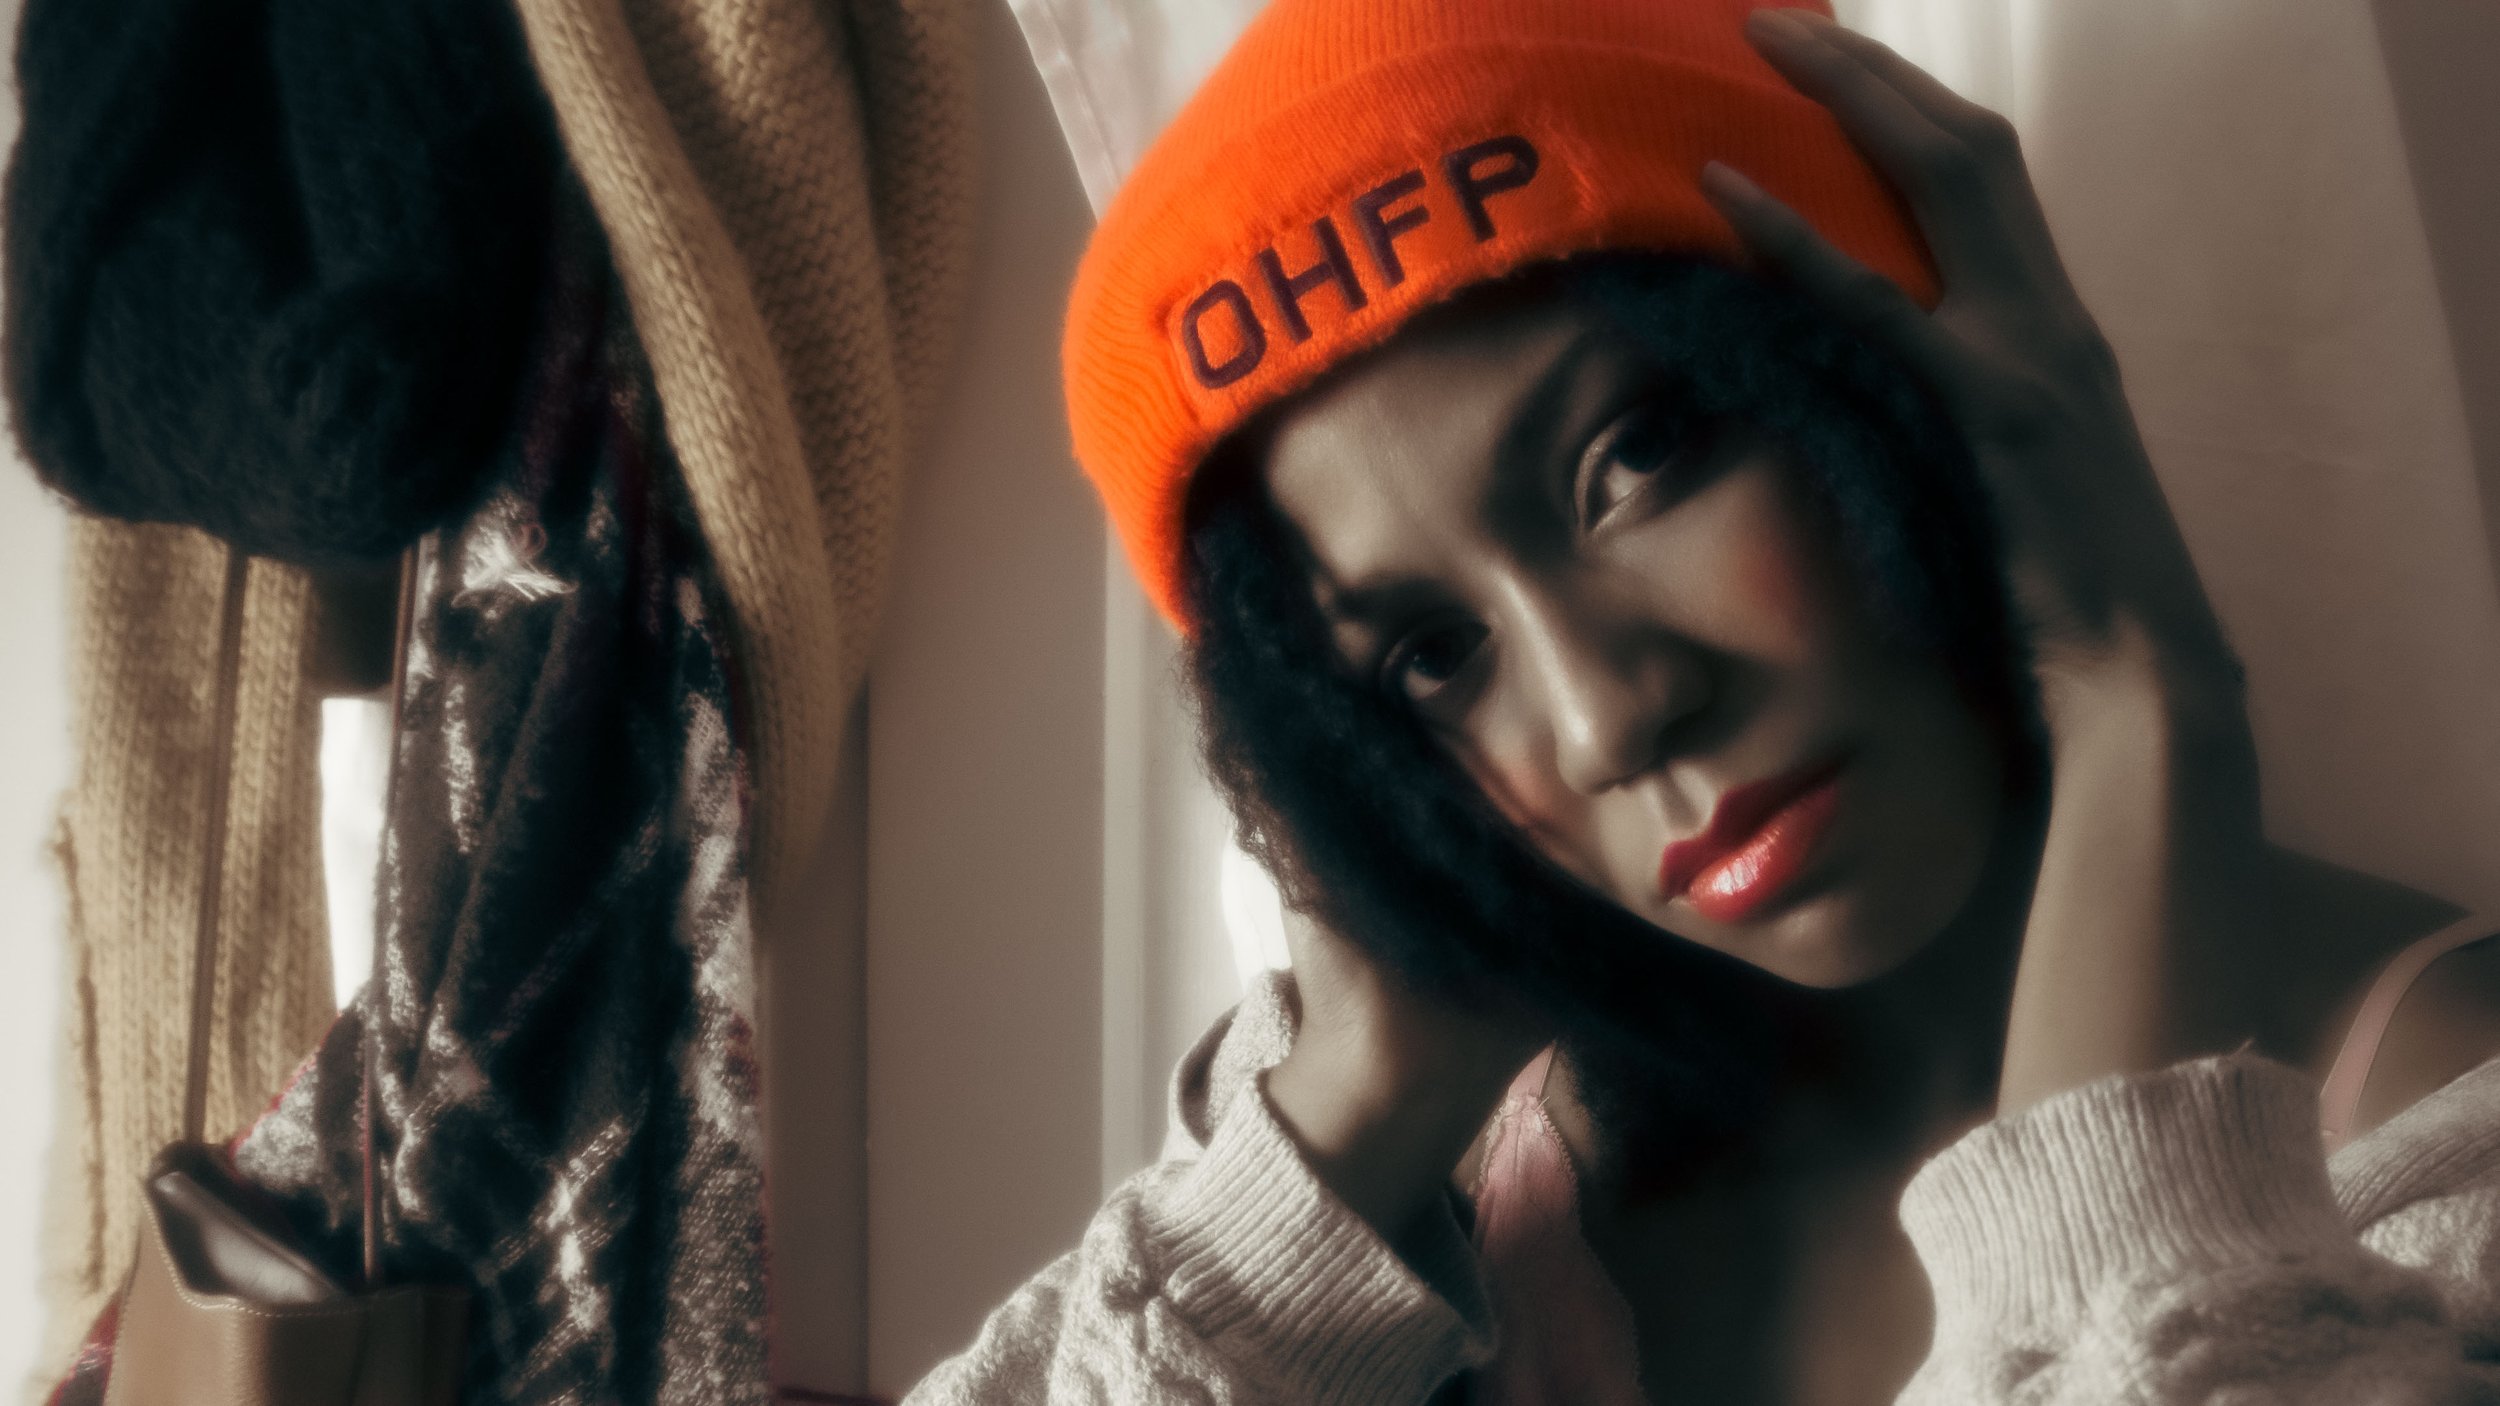 Edit-Tbraid-out-orange-hat-desat.jpg